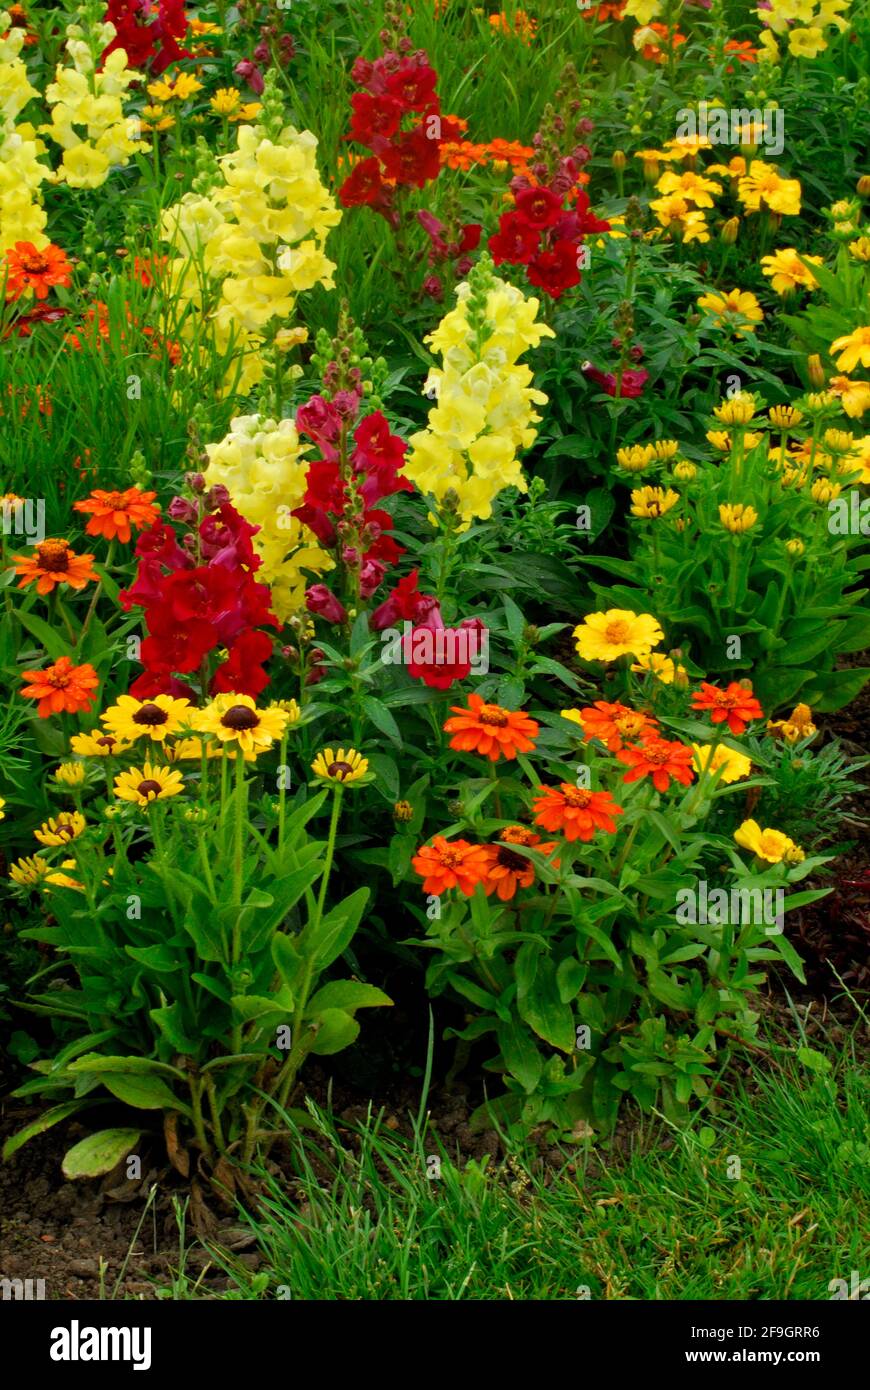 Flowerbed, common snapdragon (Antirrhinum majus) and n (Zinnia) , snapdragon , Zinnia Stock Photo